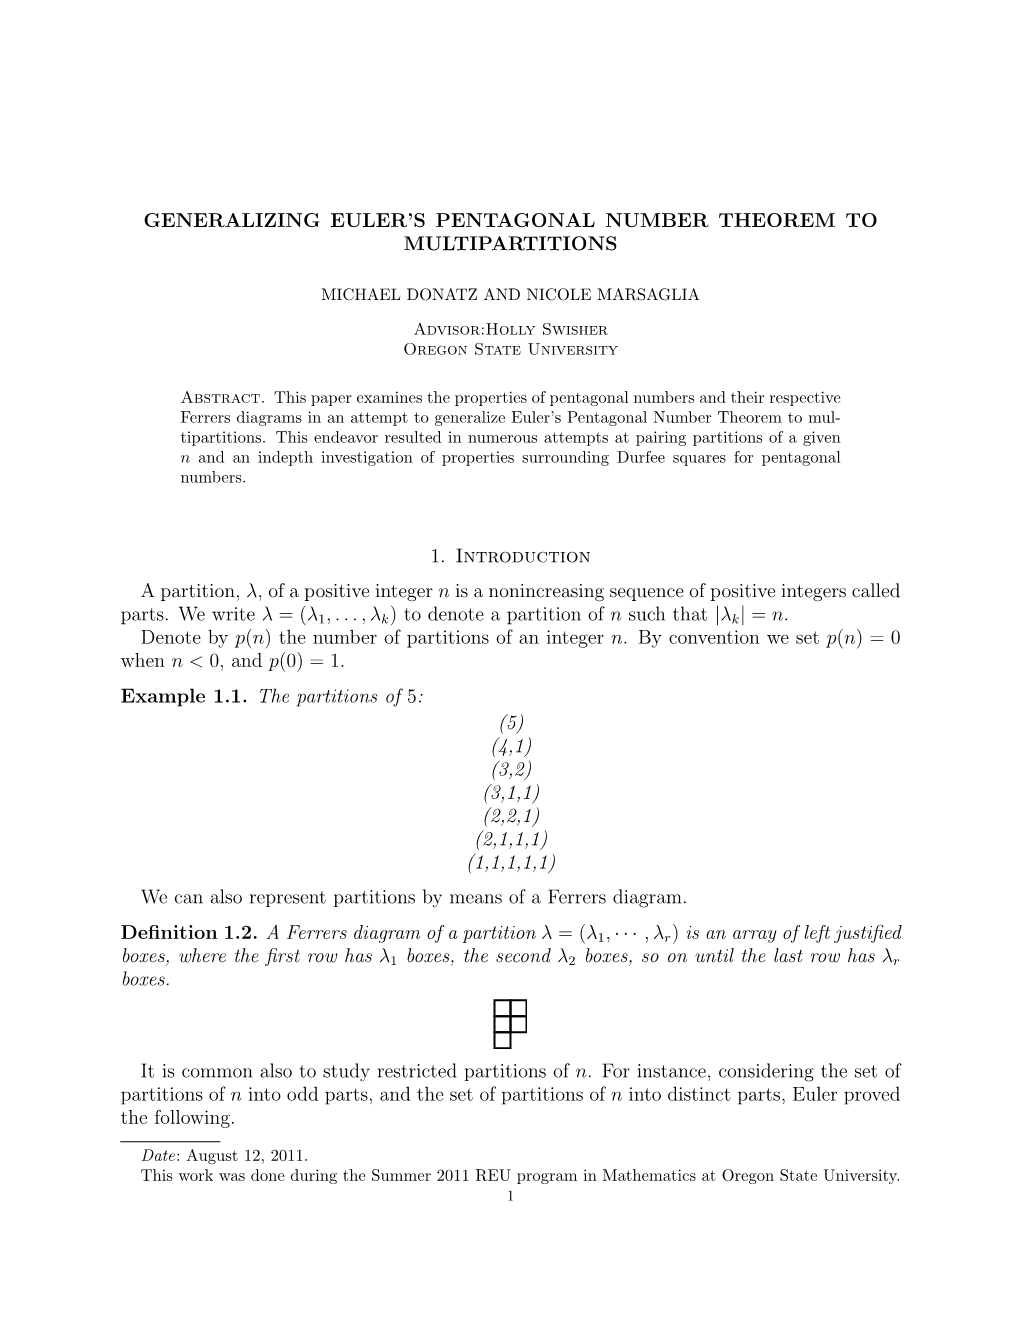 Generalizing Euler's Pentagonal Number Theorem to Multipartitions